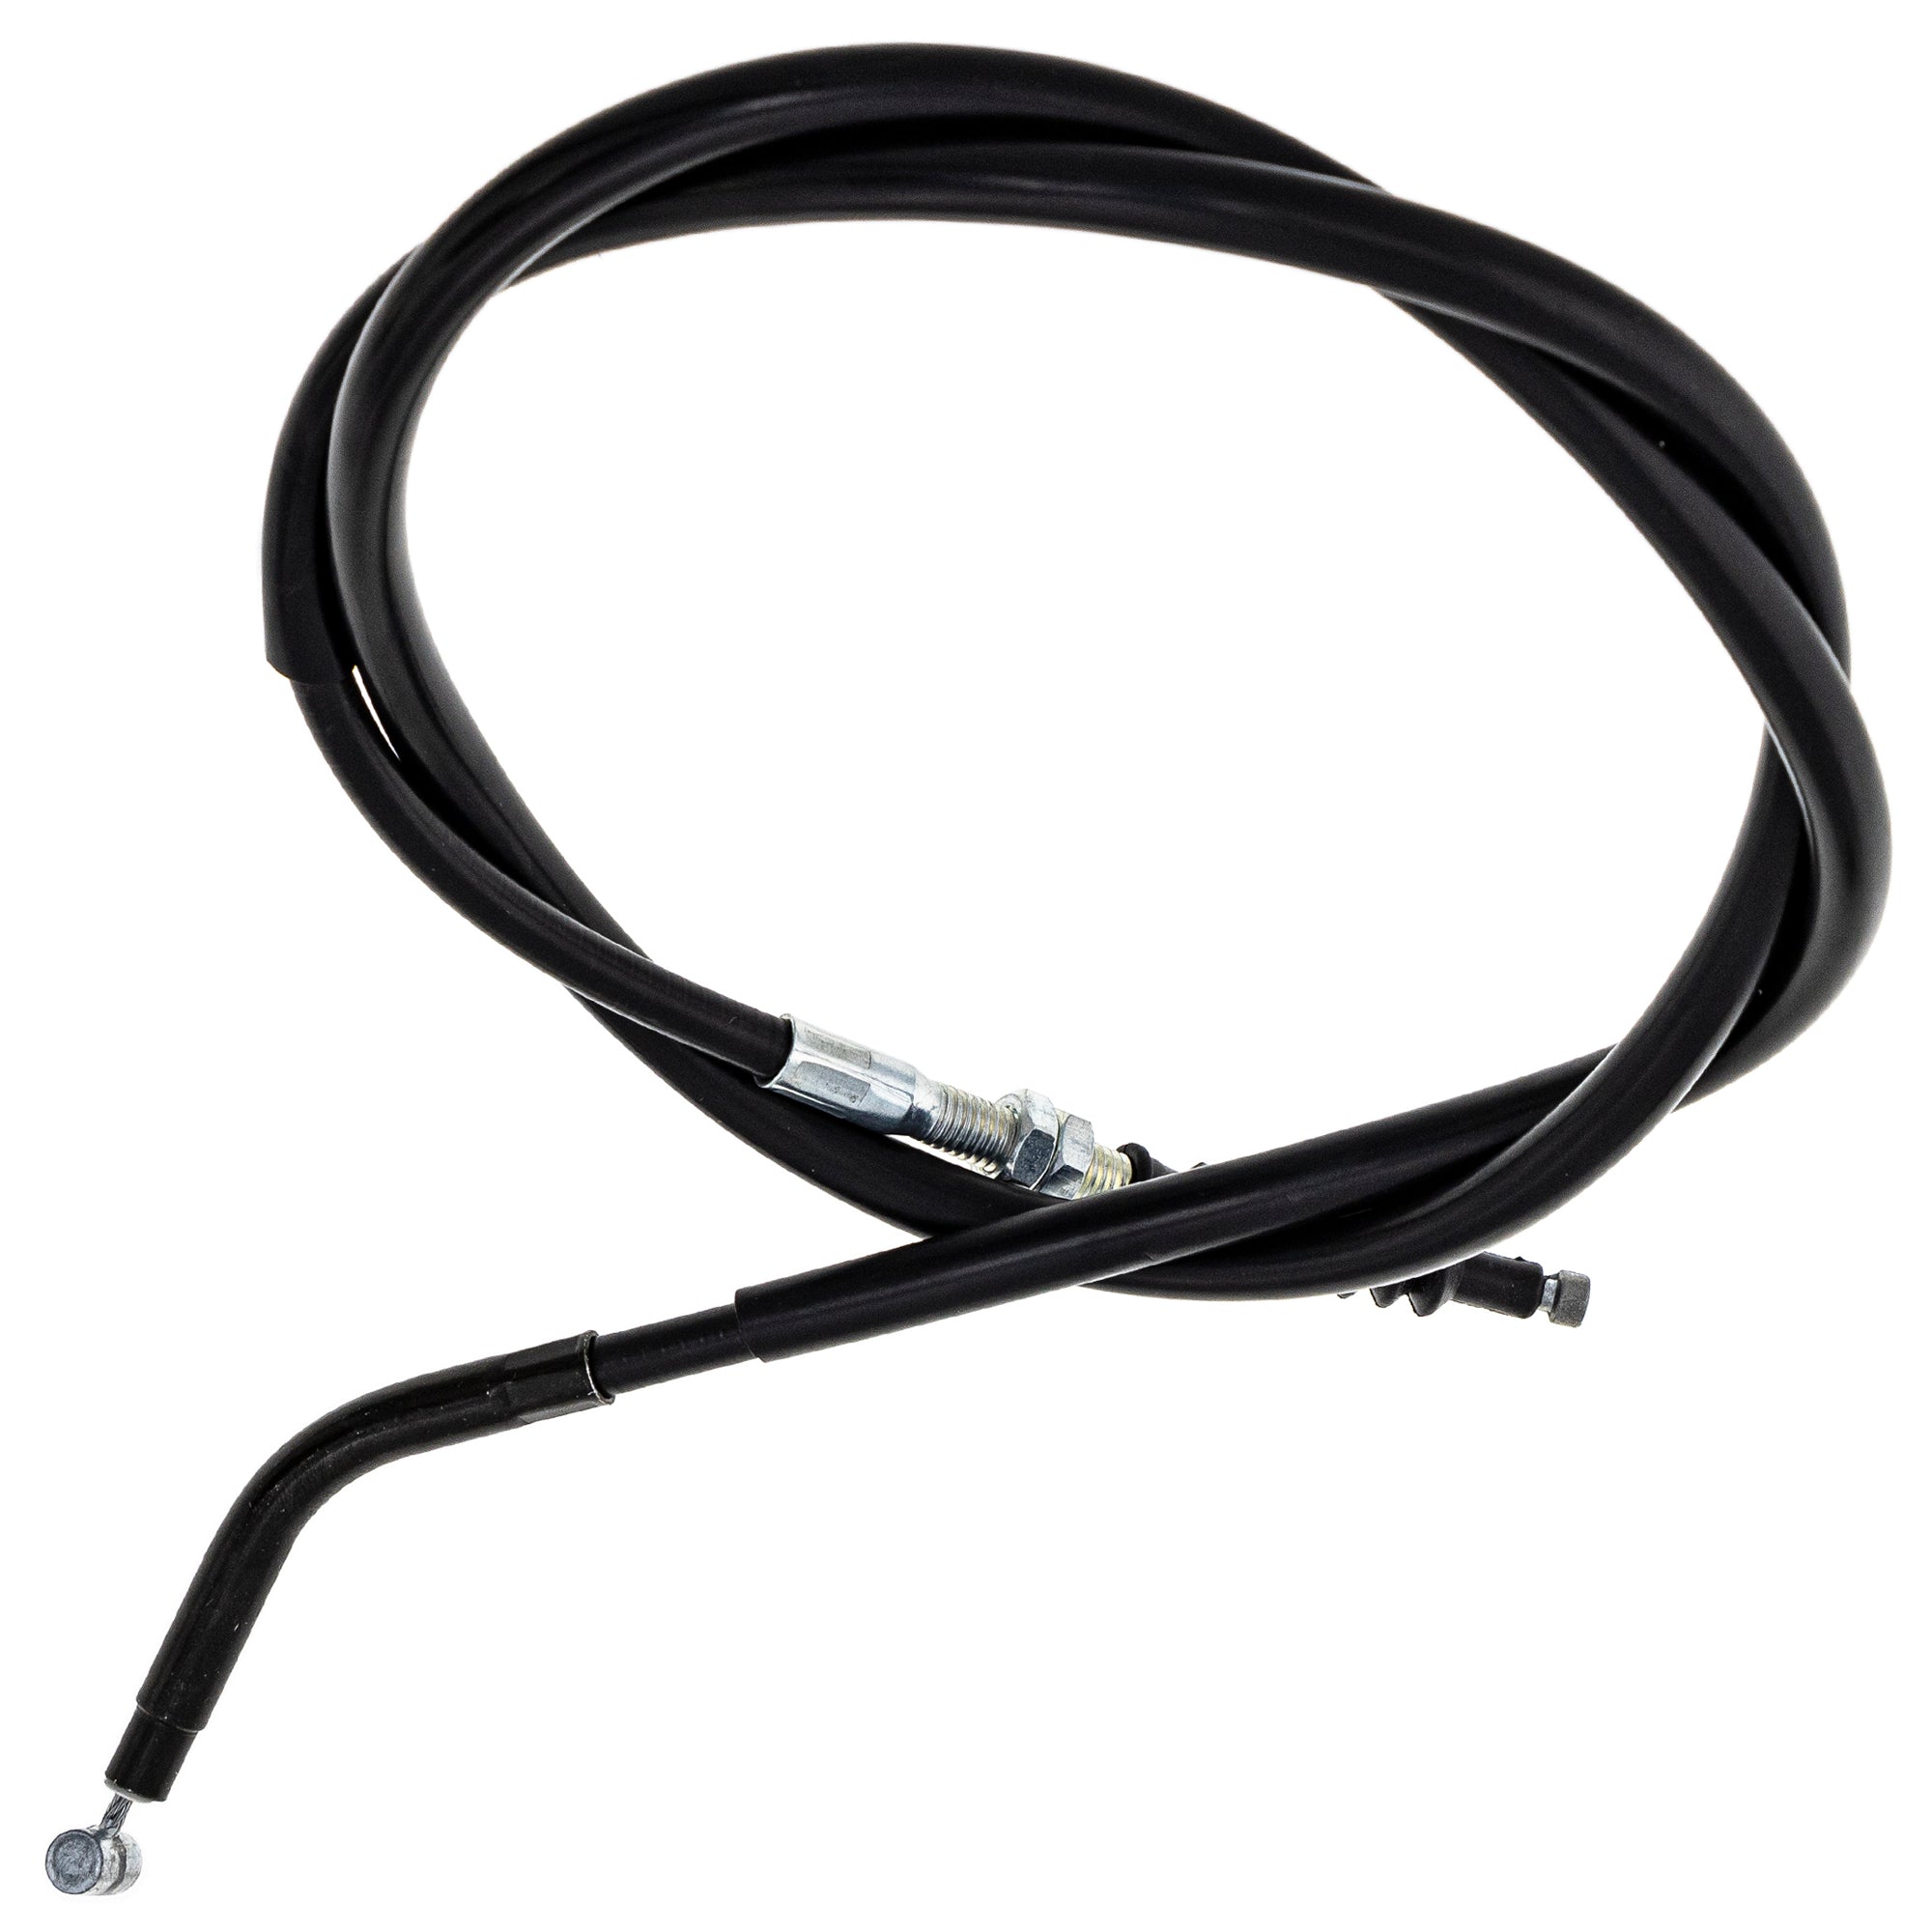 Clutch Cable for Kawasaki GPz550 ZX550 Ninja ZX6 54011-1207 54011-1301